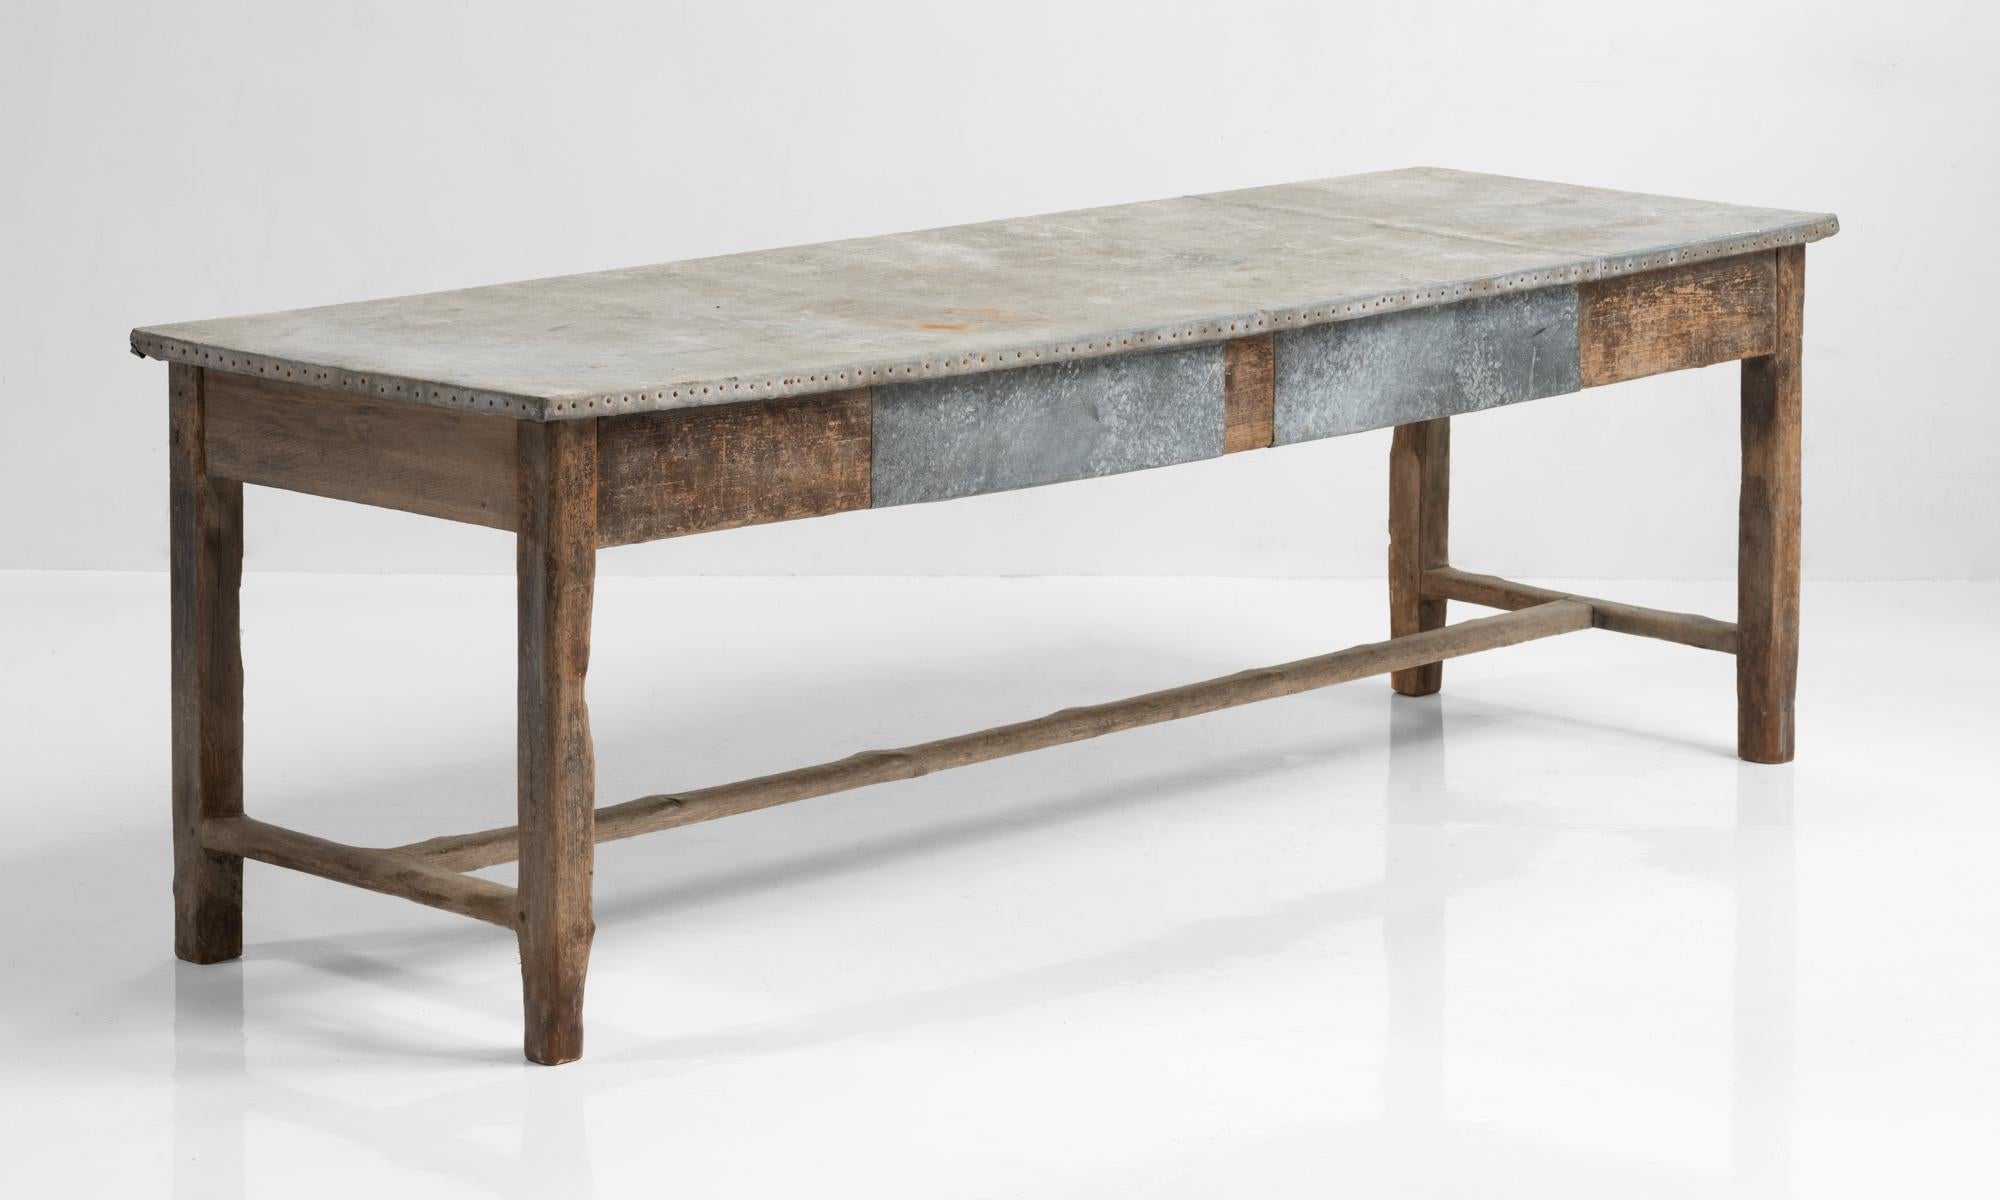 Zinc top work table, England, circa 1900

Beautifully patinated form with original zinc top and apron patchwork.